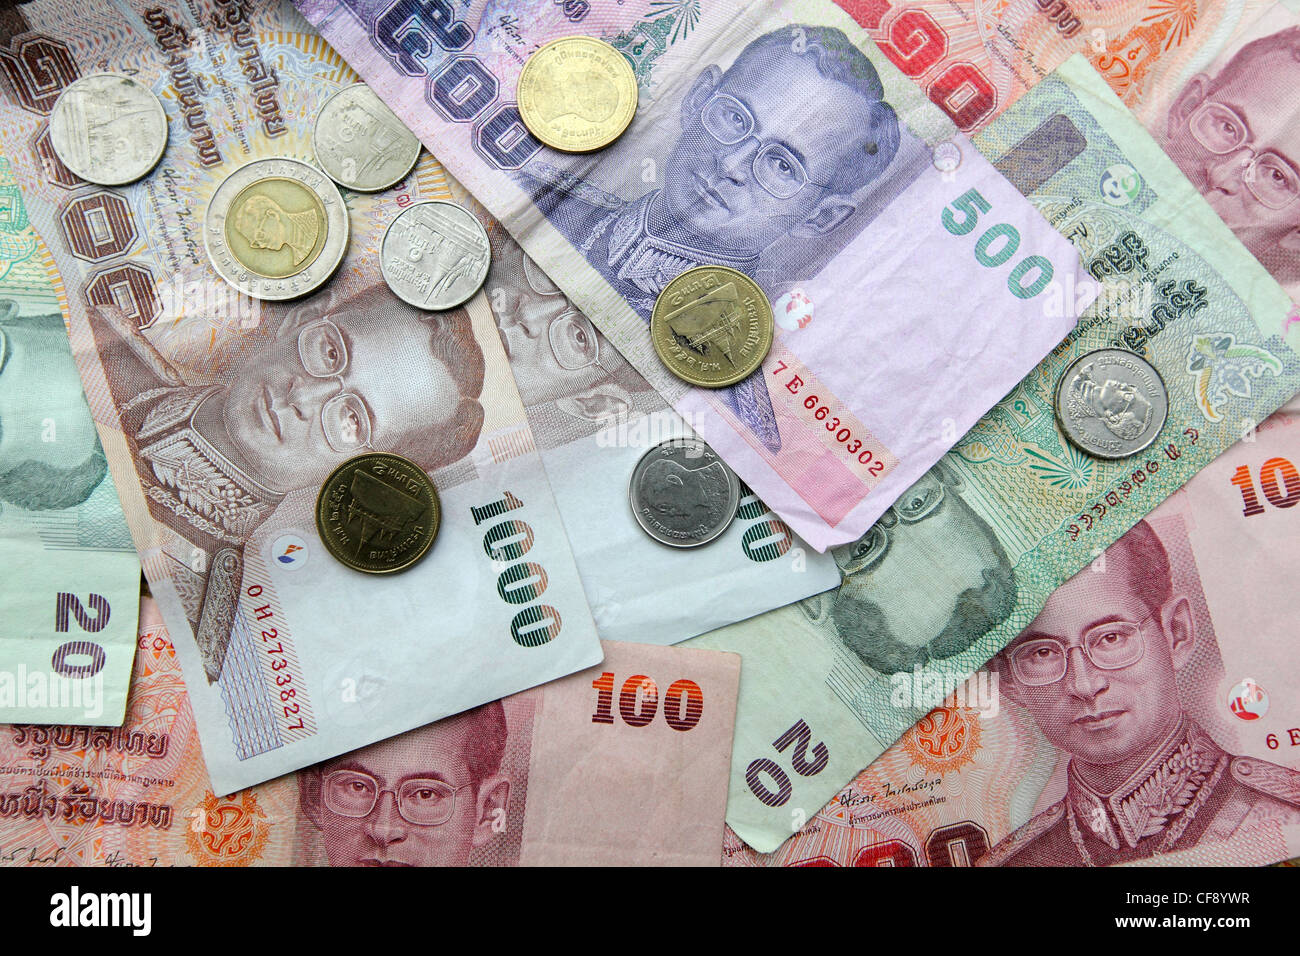 Евро или доллар в тайланде. Бат валюта Тайланда. Валюта Тайланда 100 бат. Денежная валюта Тайланда тайский бат. Тайские баты купюры.